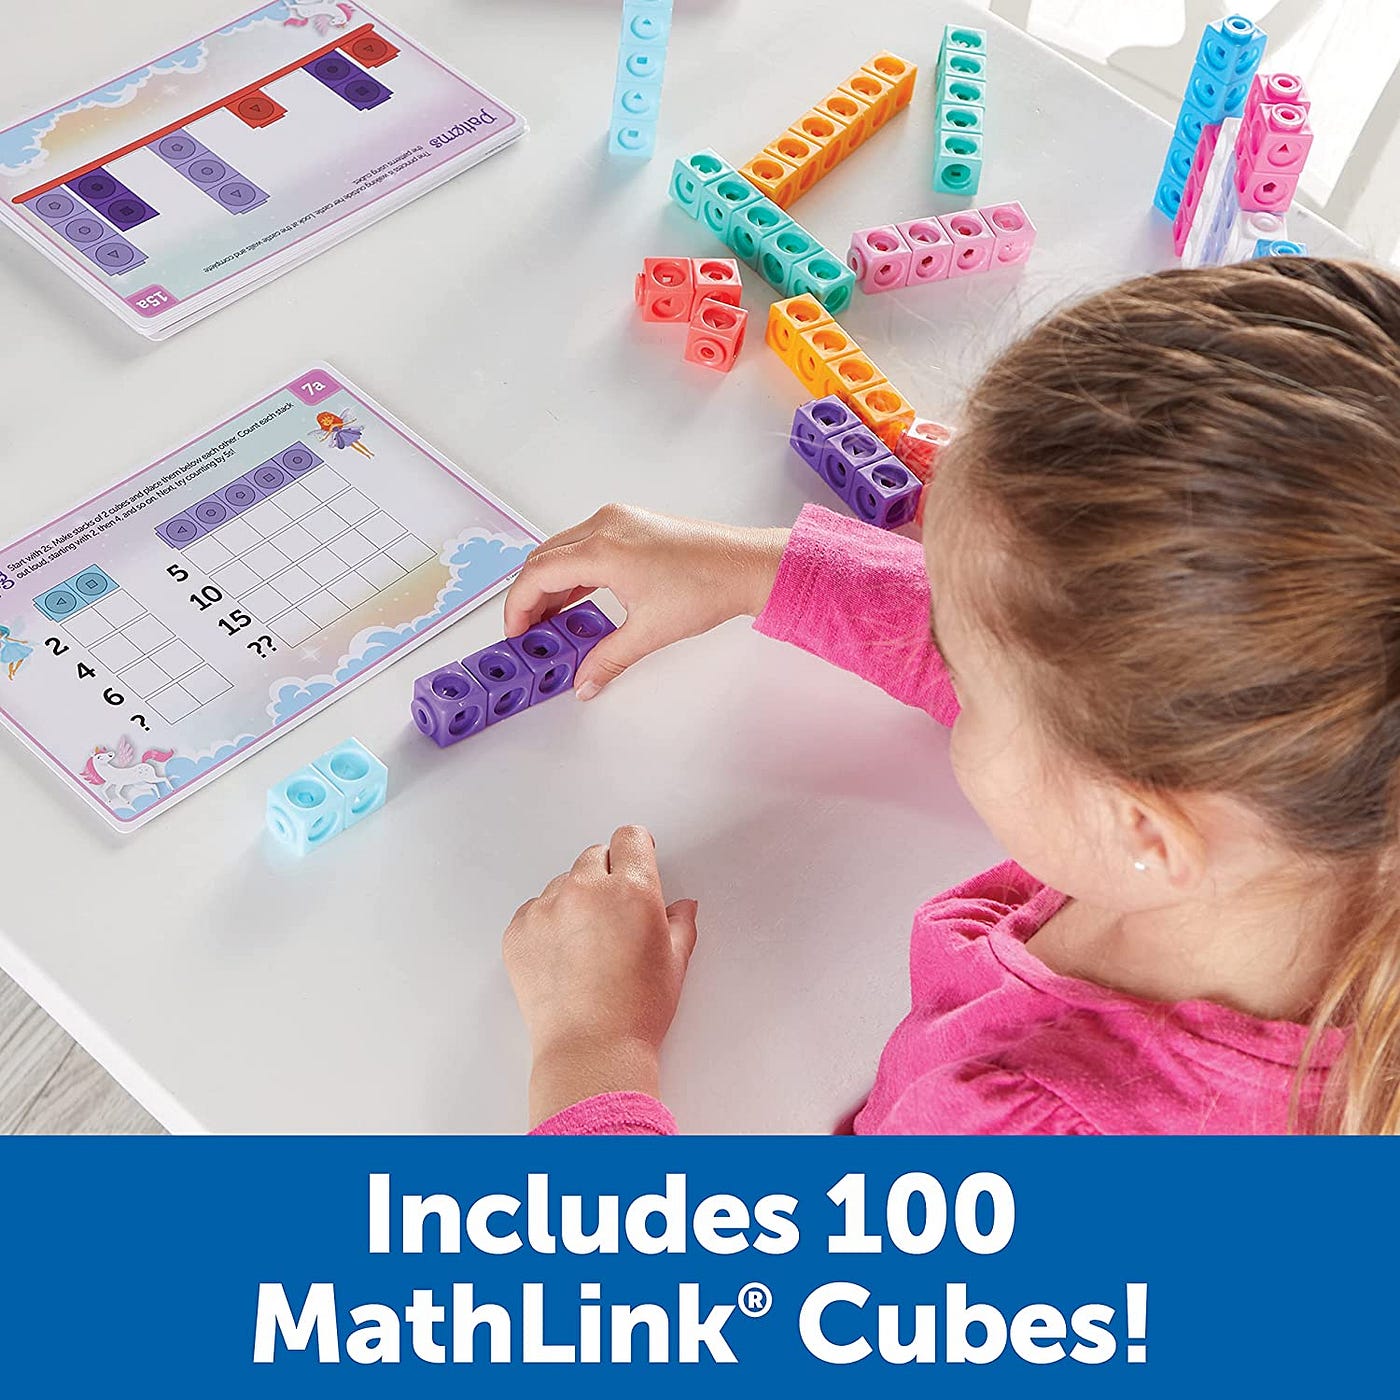 Learning Resources — Mathlink Cubes Early Math Activity Set - Curiouskidzz  - Medium